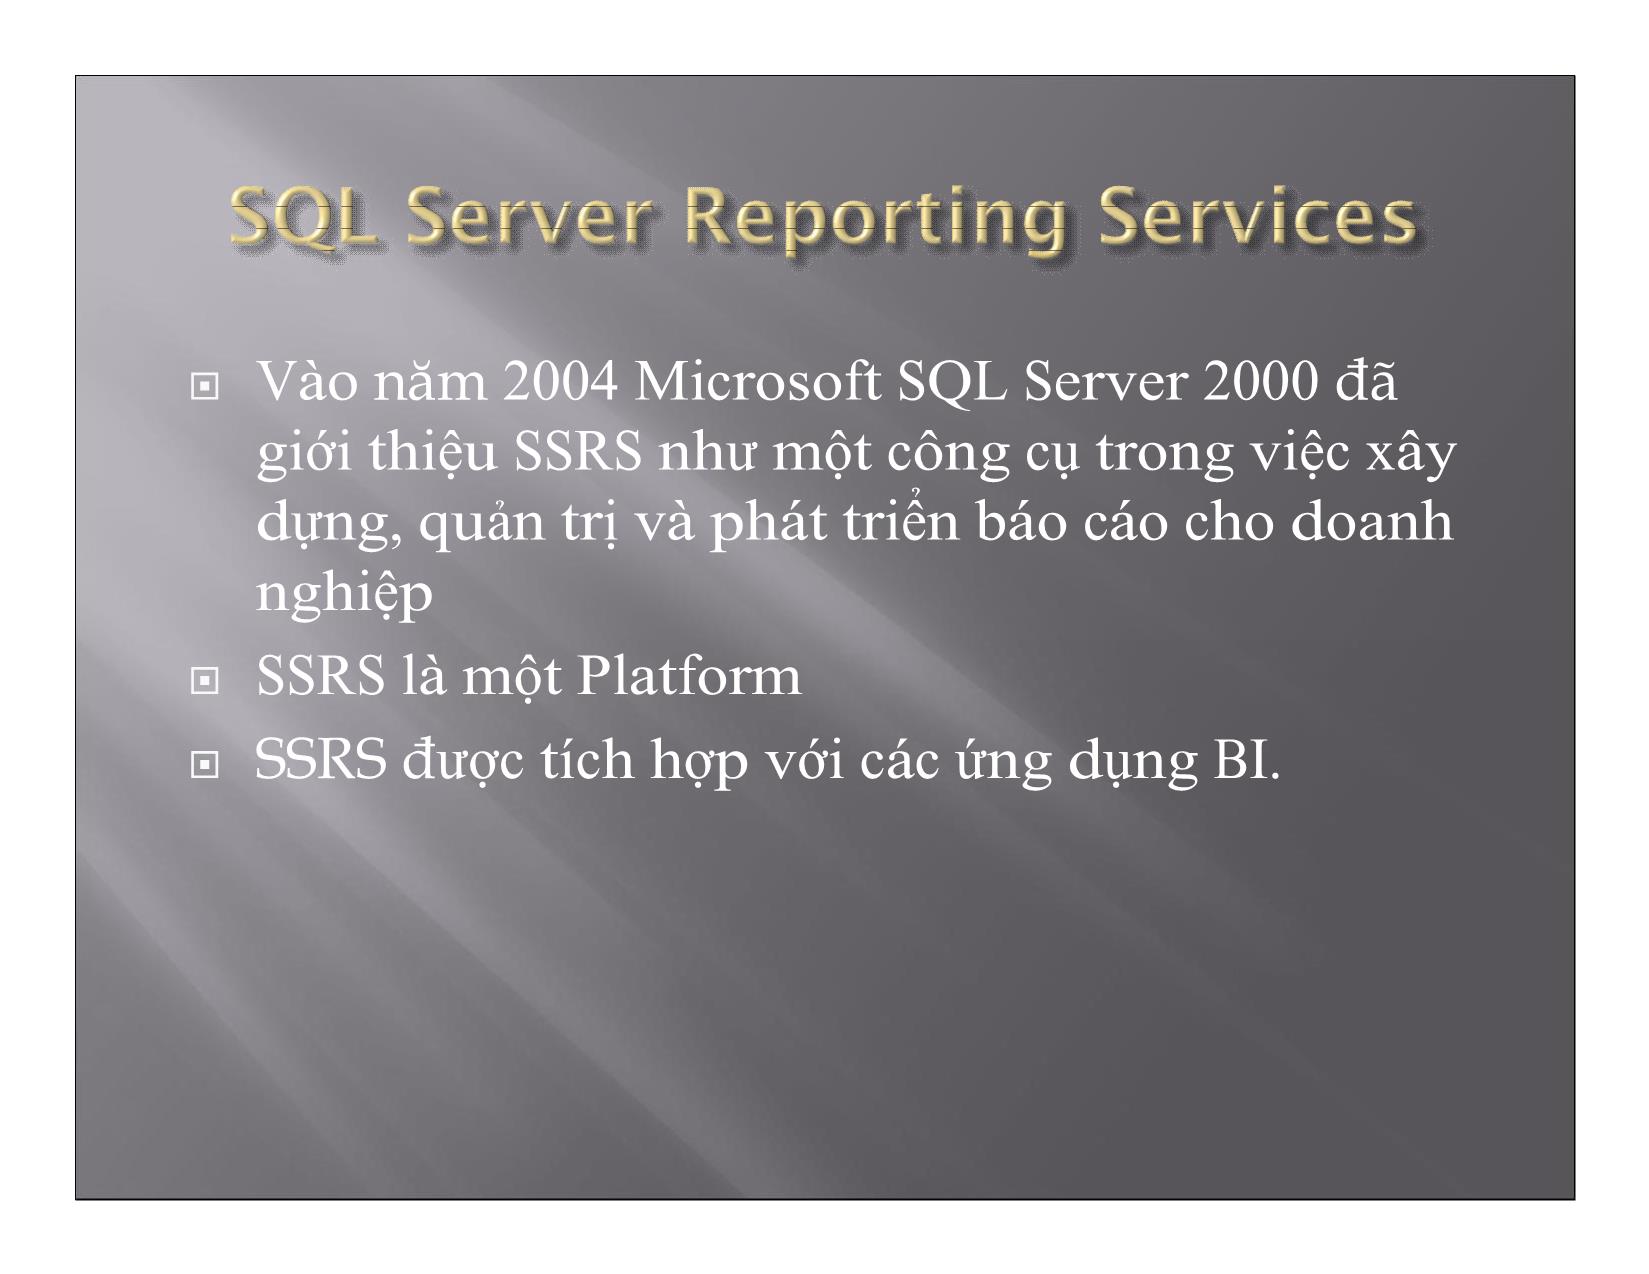 SQL Server Reporting Services trang 4